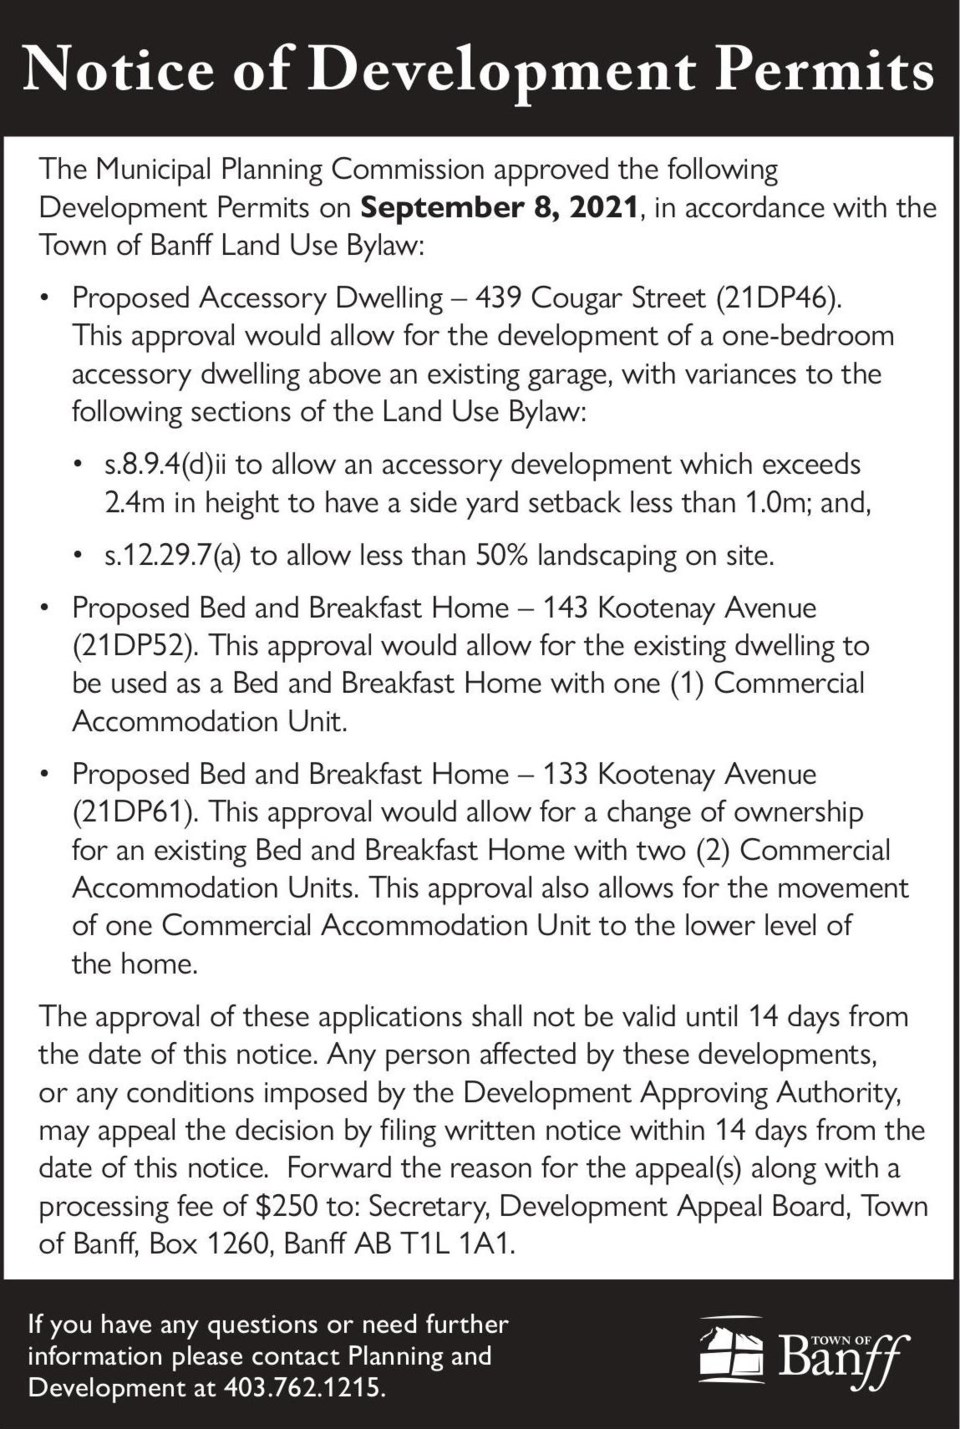 PUBLIC NOTICE – Town of Banff - development permits